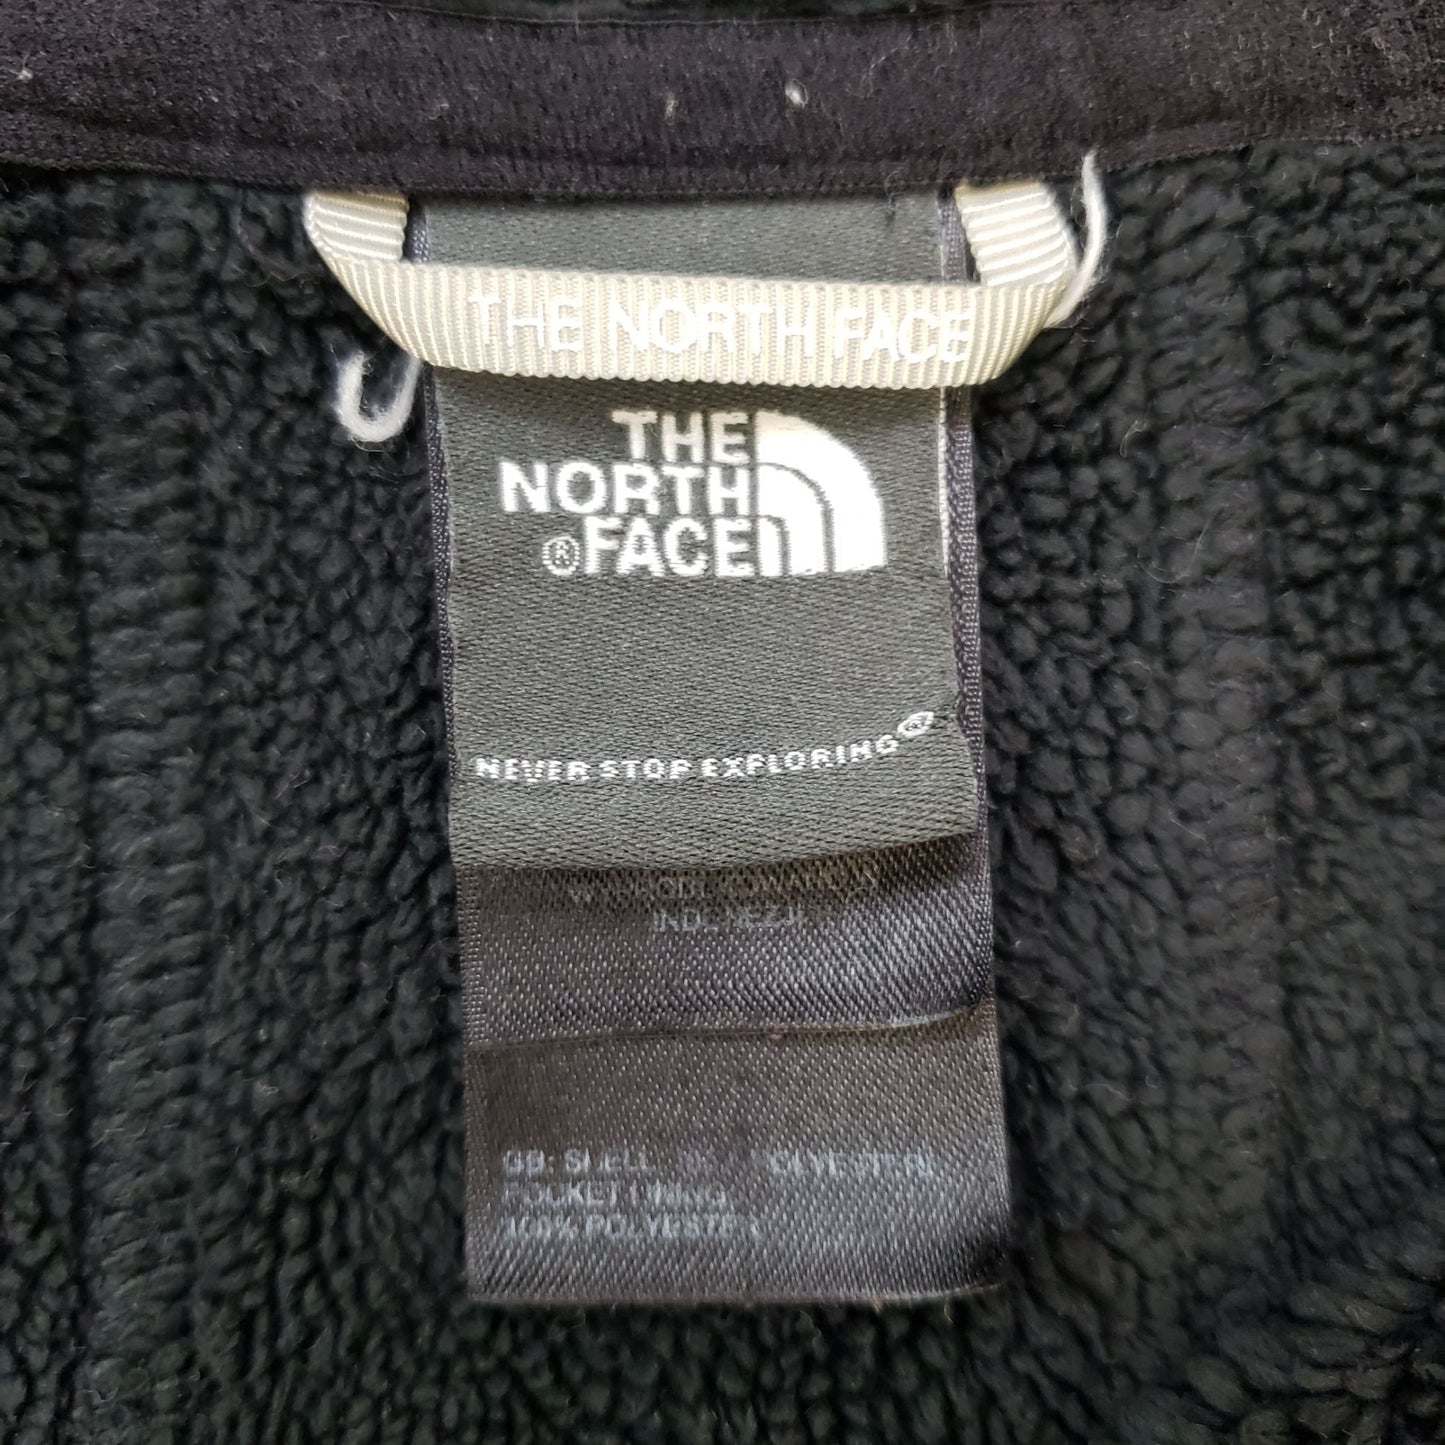 The North Face Full Zip Fleece Jacket Size Medium